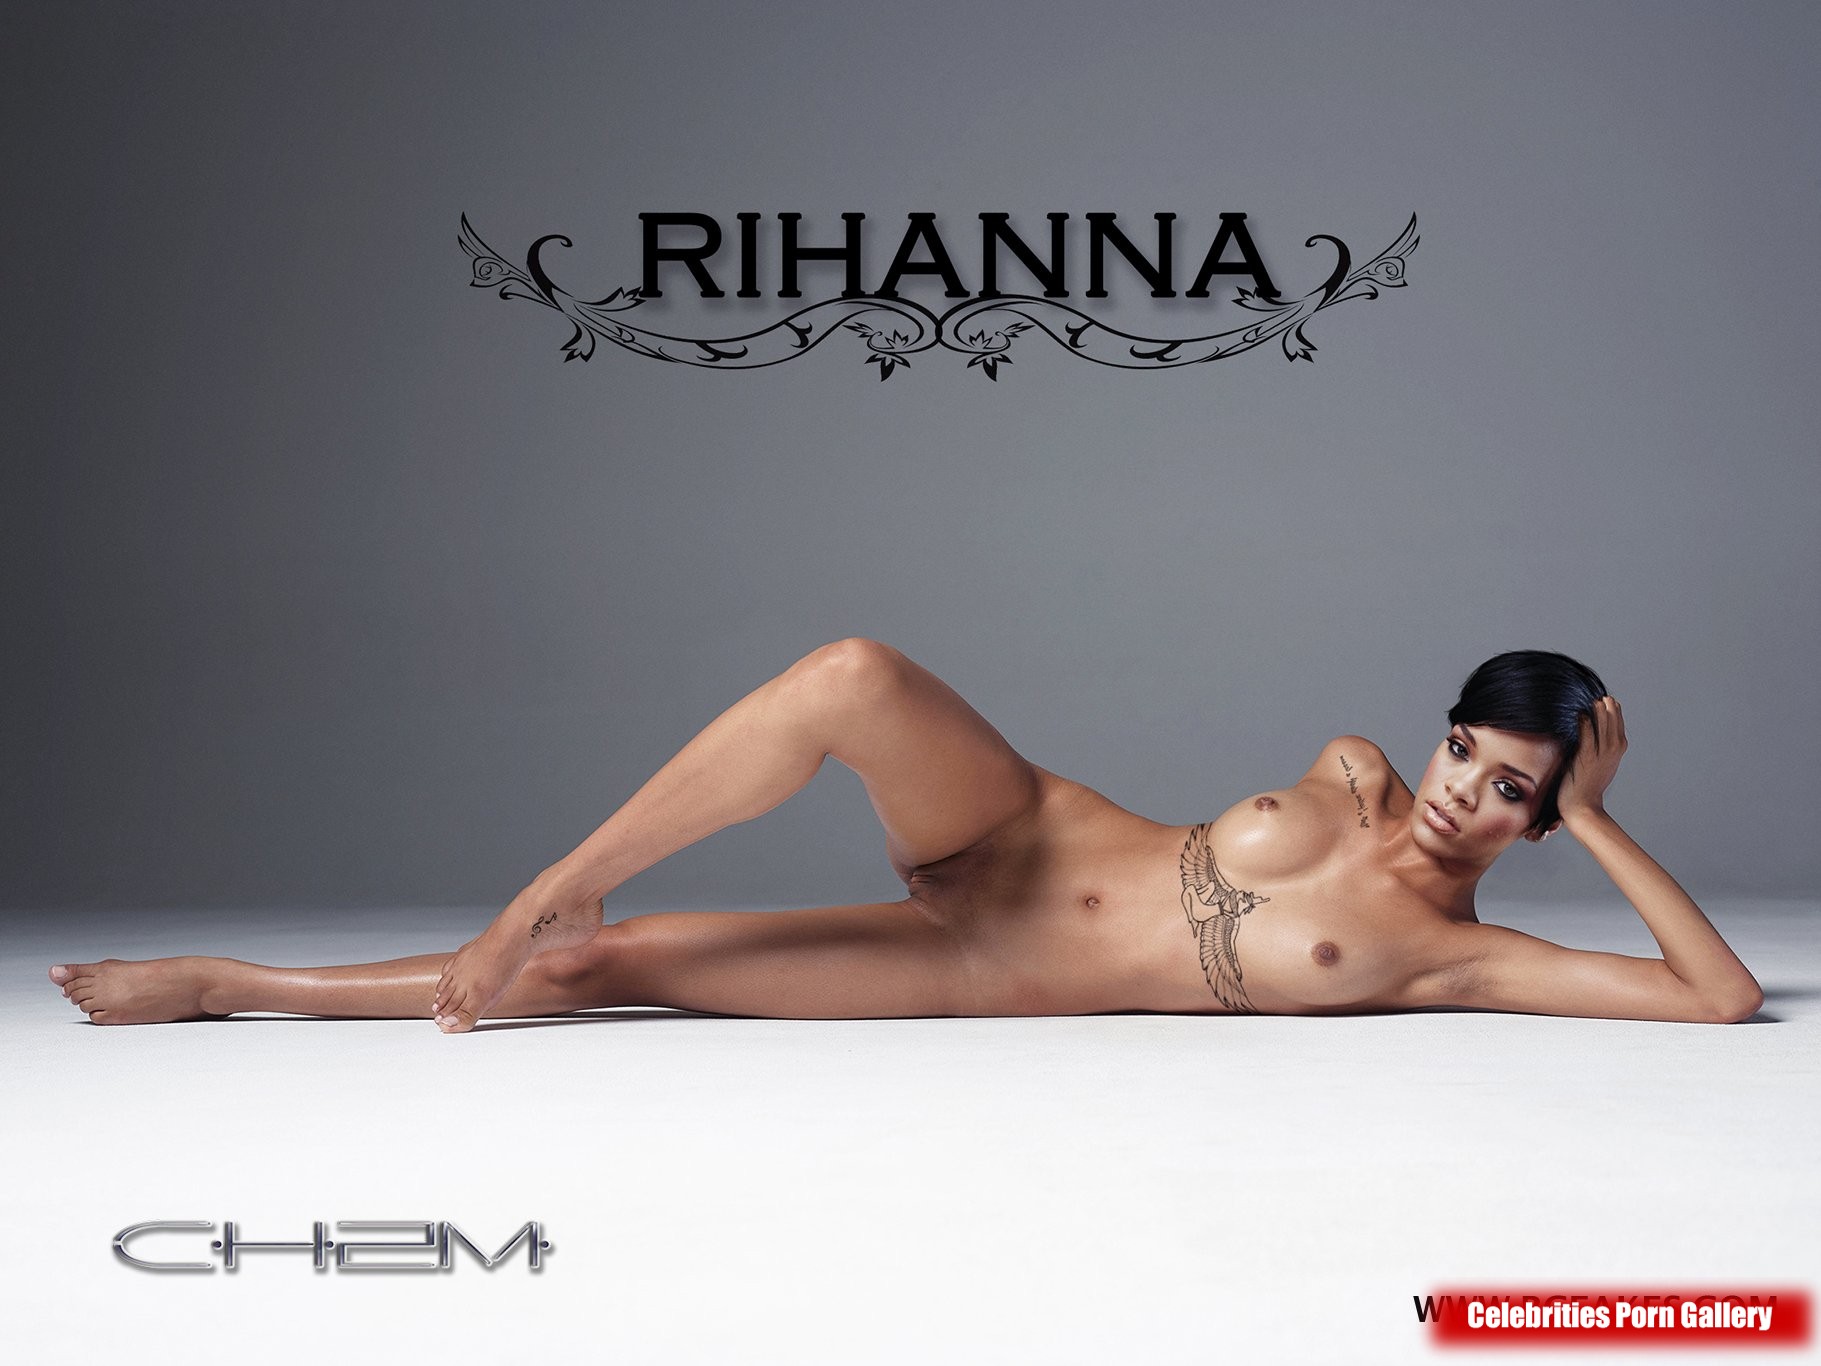 Rihanna fake nude pics